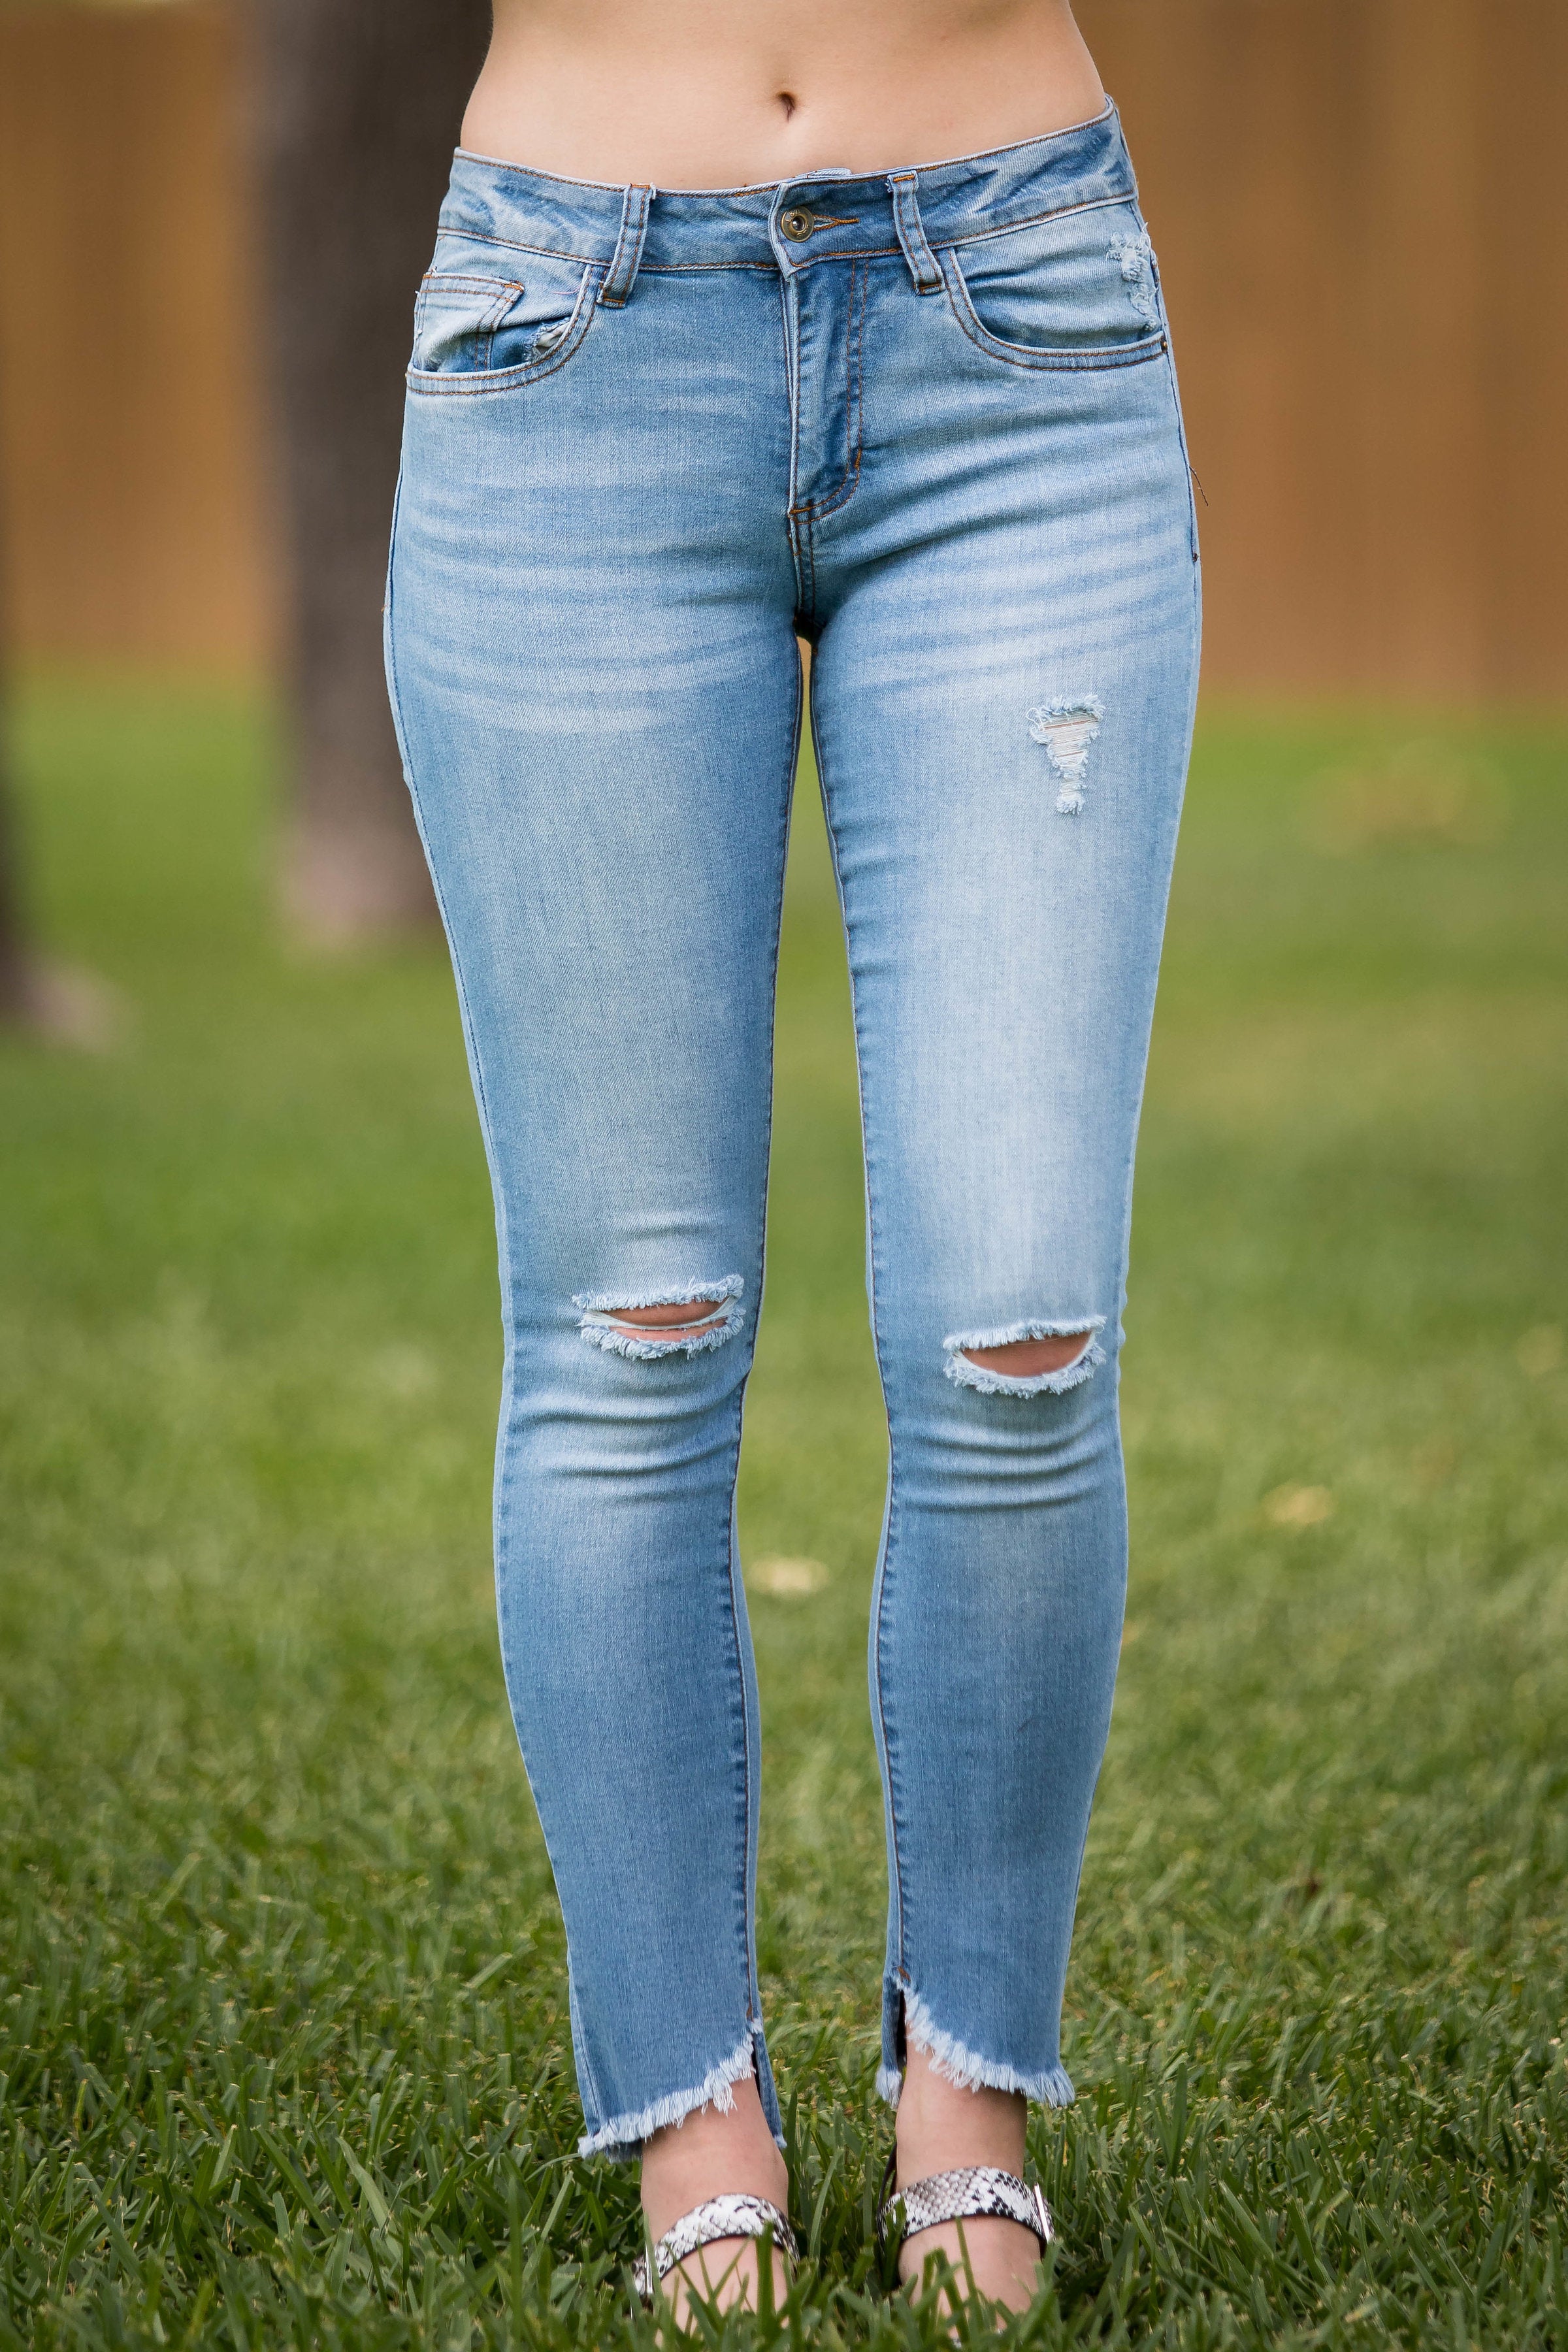 Distressed/Ripped Jeans | Boutique Denim Jeans Plus Size